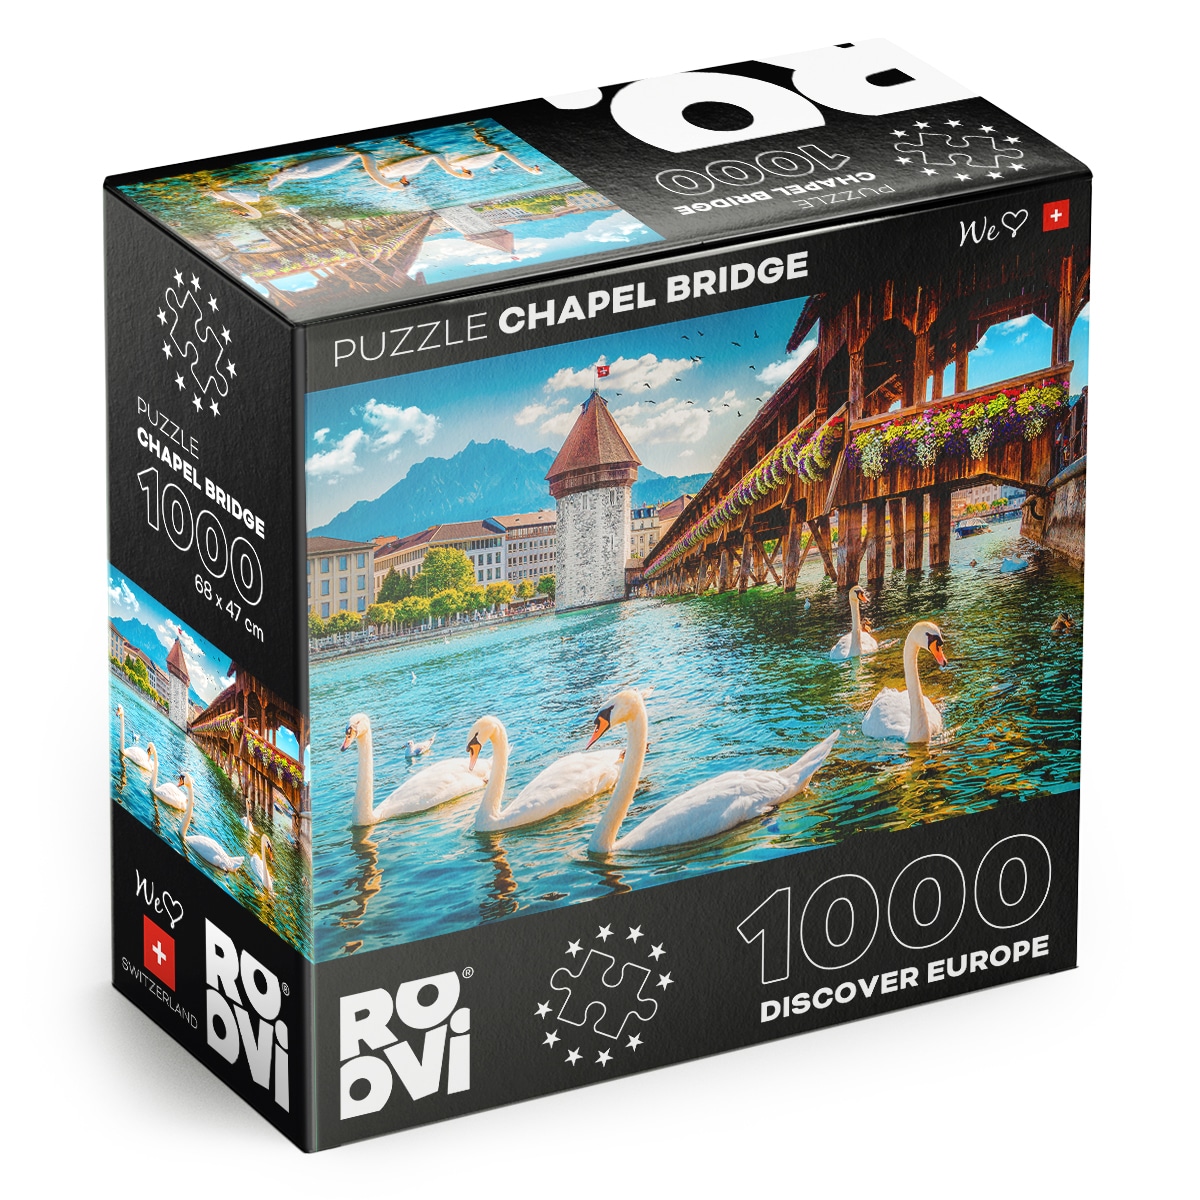 Puzzle Chapel Bridge, Lucerne, Switzerland – Puzzle adulți 1000 piese – Discover Europe Puzzle Adulti 1000